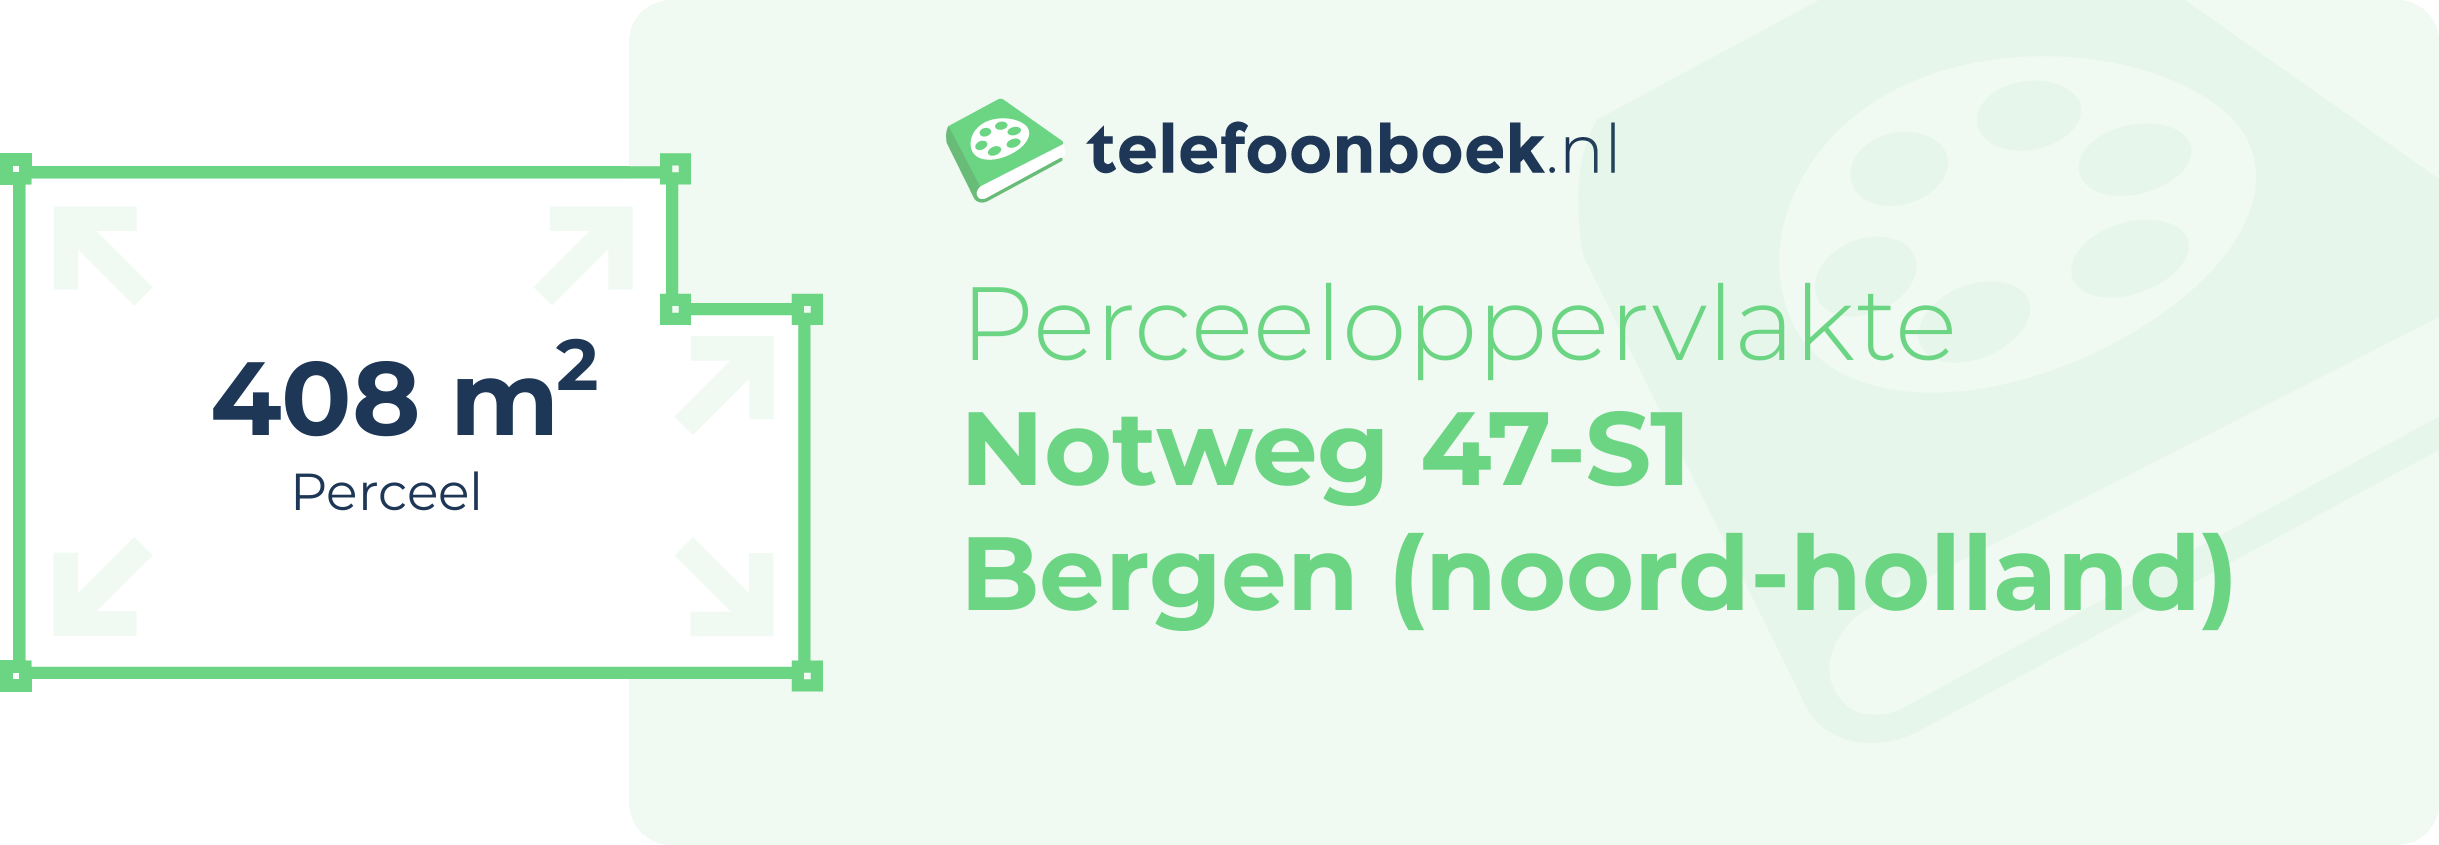 Perceeloppervlakte Notweg 47-S1 Bergen (Noord-Holland)